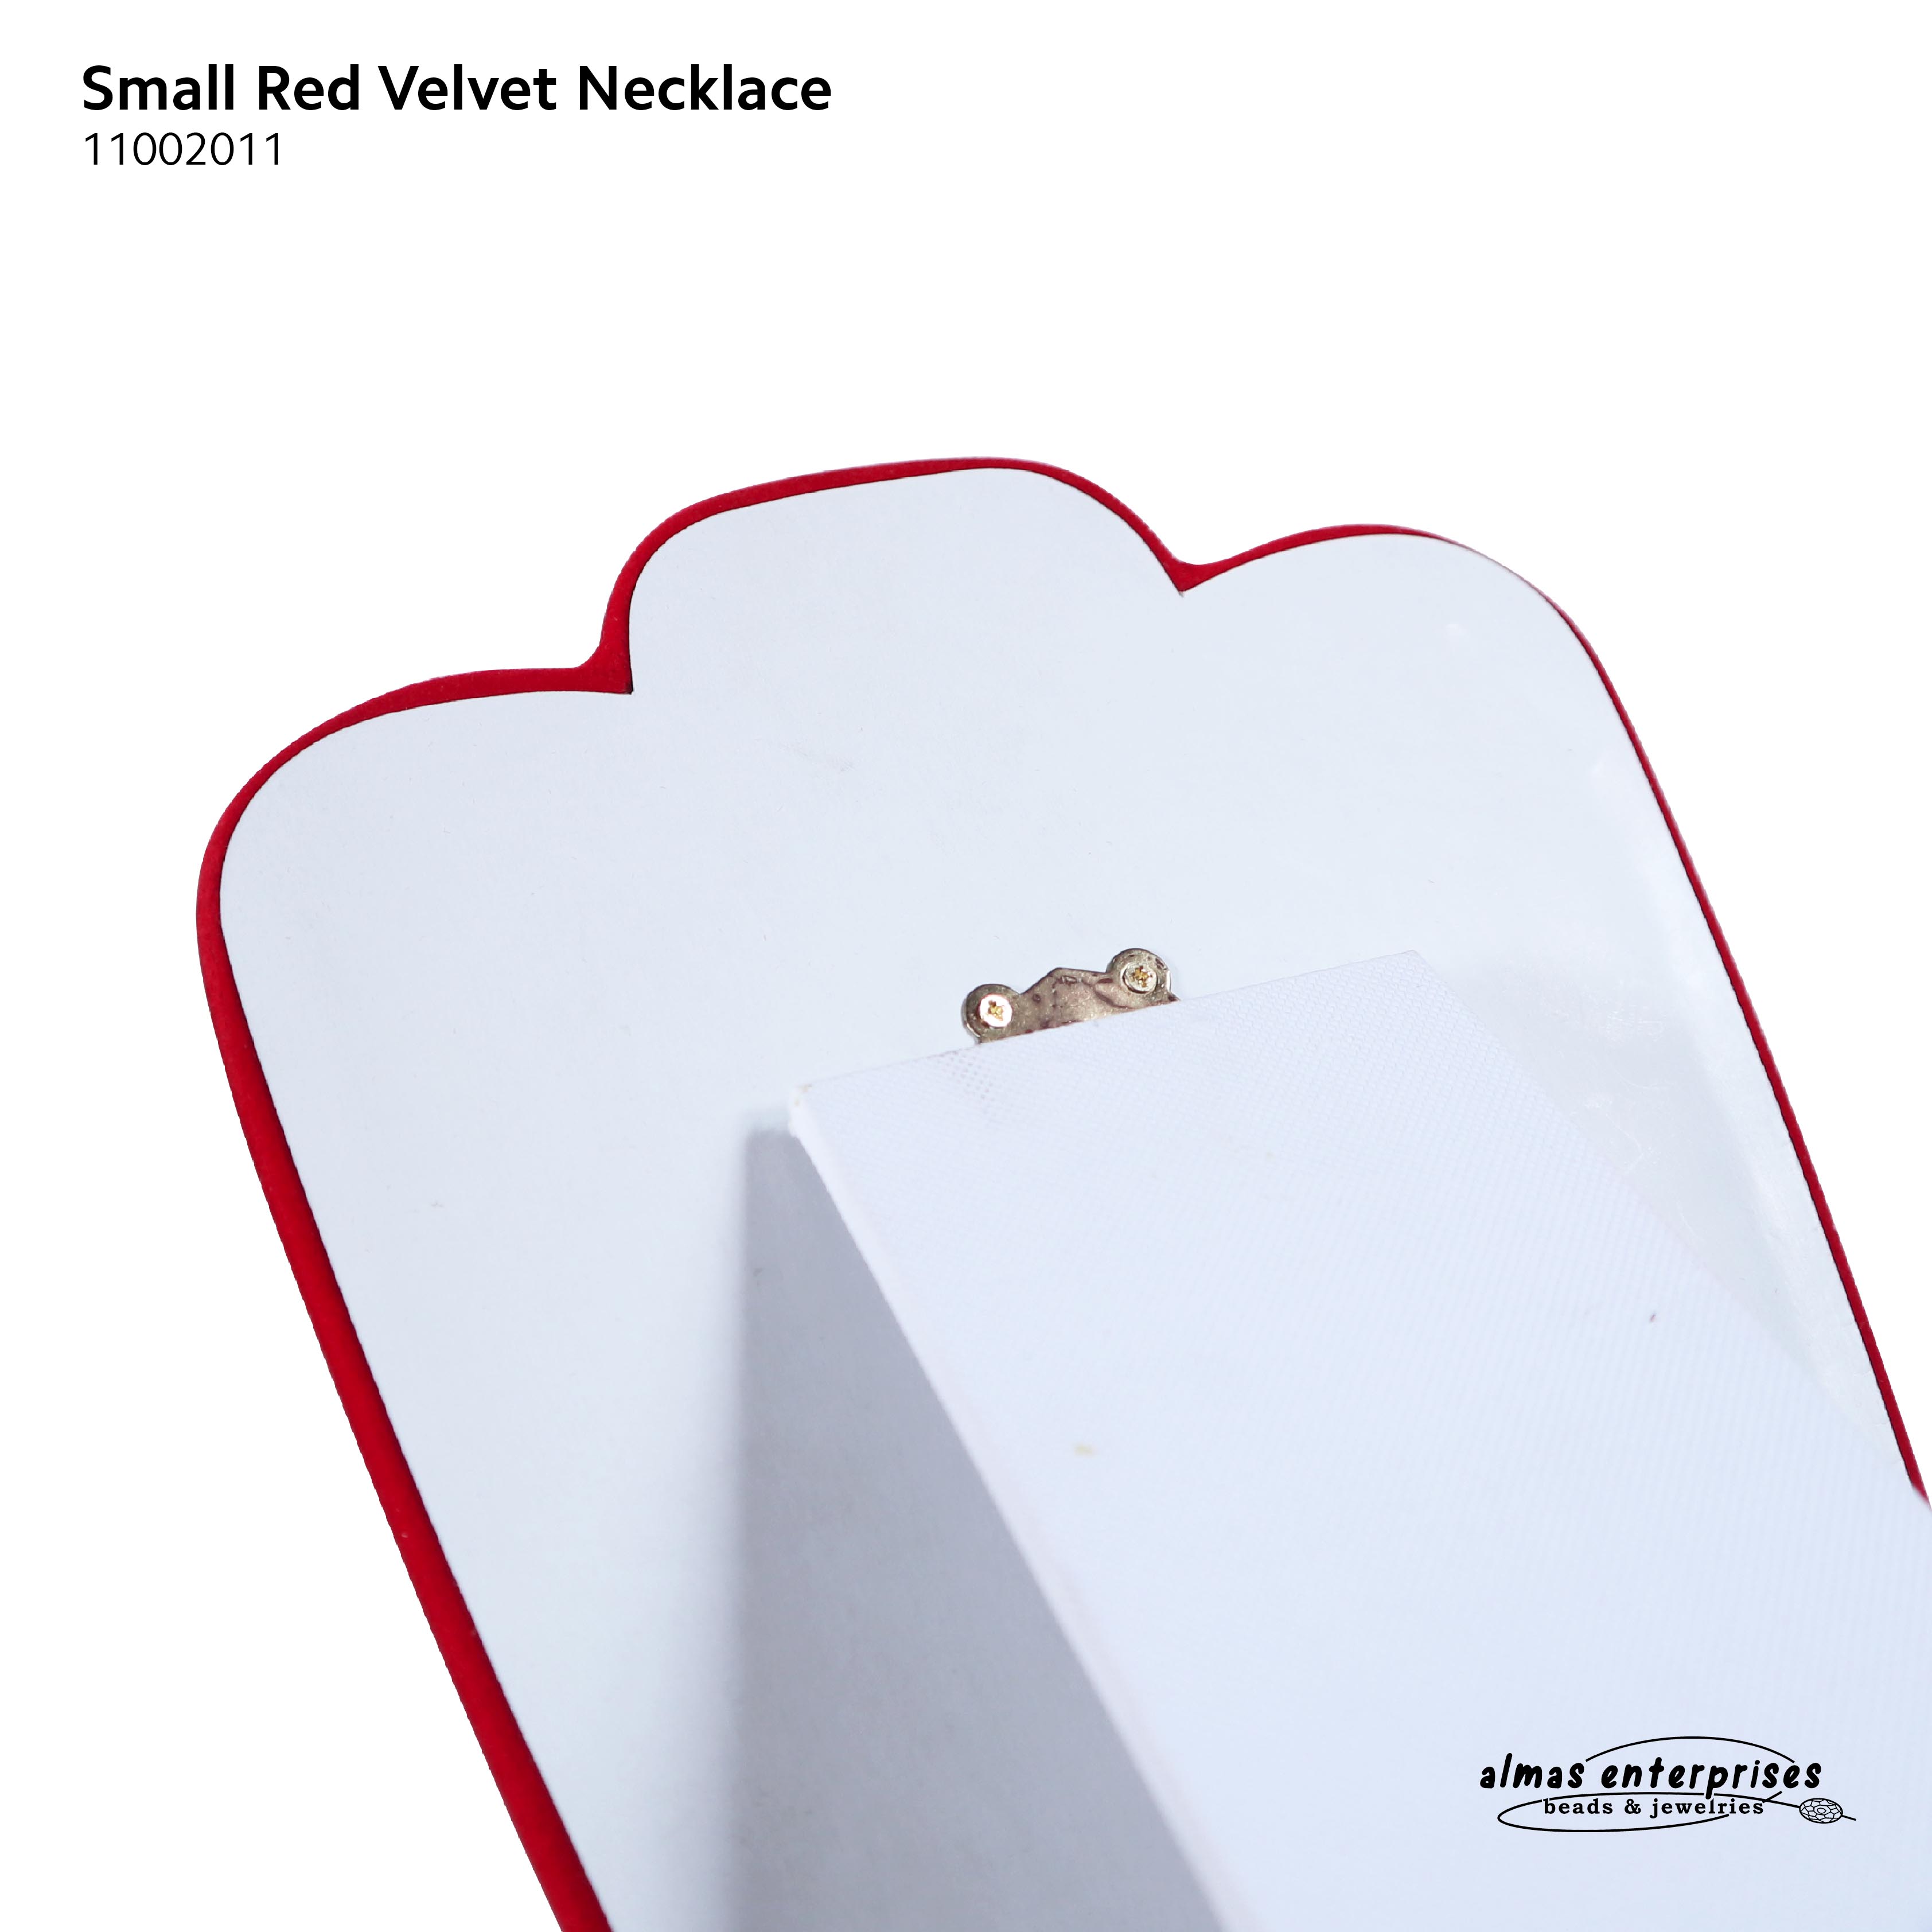 Small Red Velvet Necklace